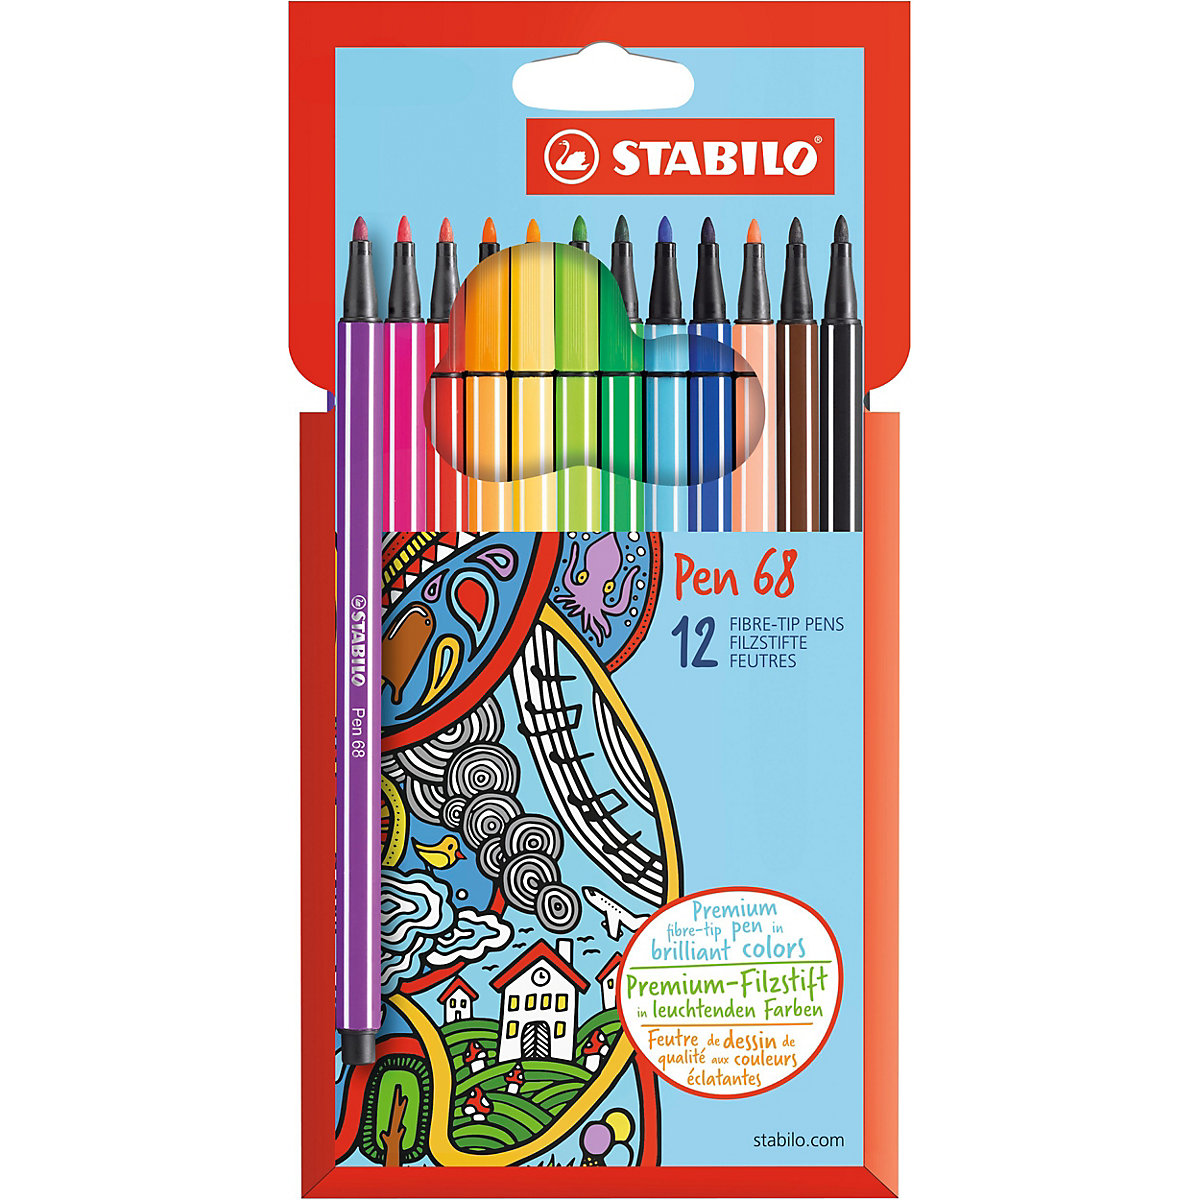 STABILO Premium-Filzstifte Pen 68 12 Farben